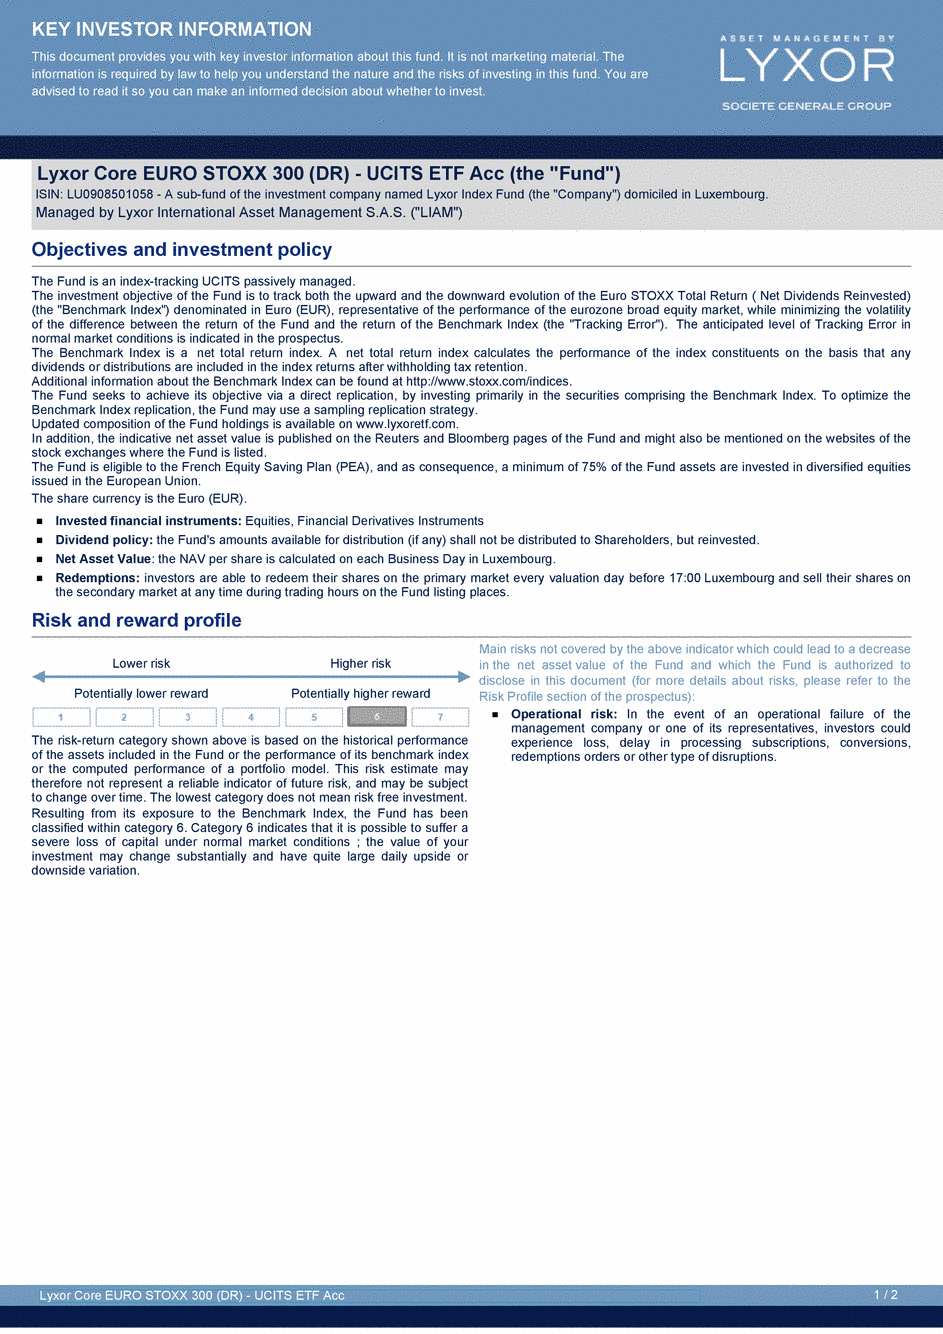 DICI Lyxor Core EURO STOXX 300 (DR) - UCITS ETF Acc - 19/02/2021 - Anglais